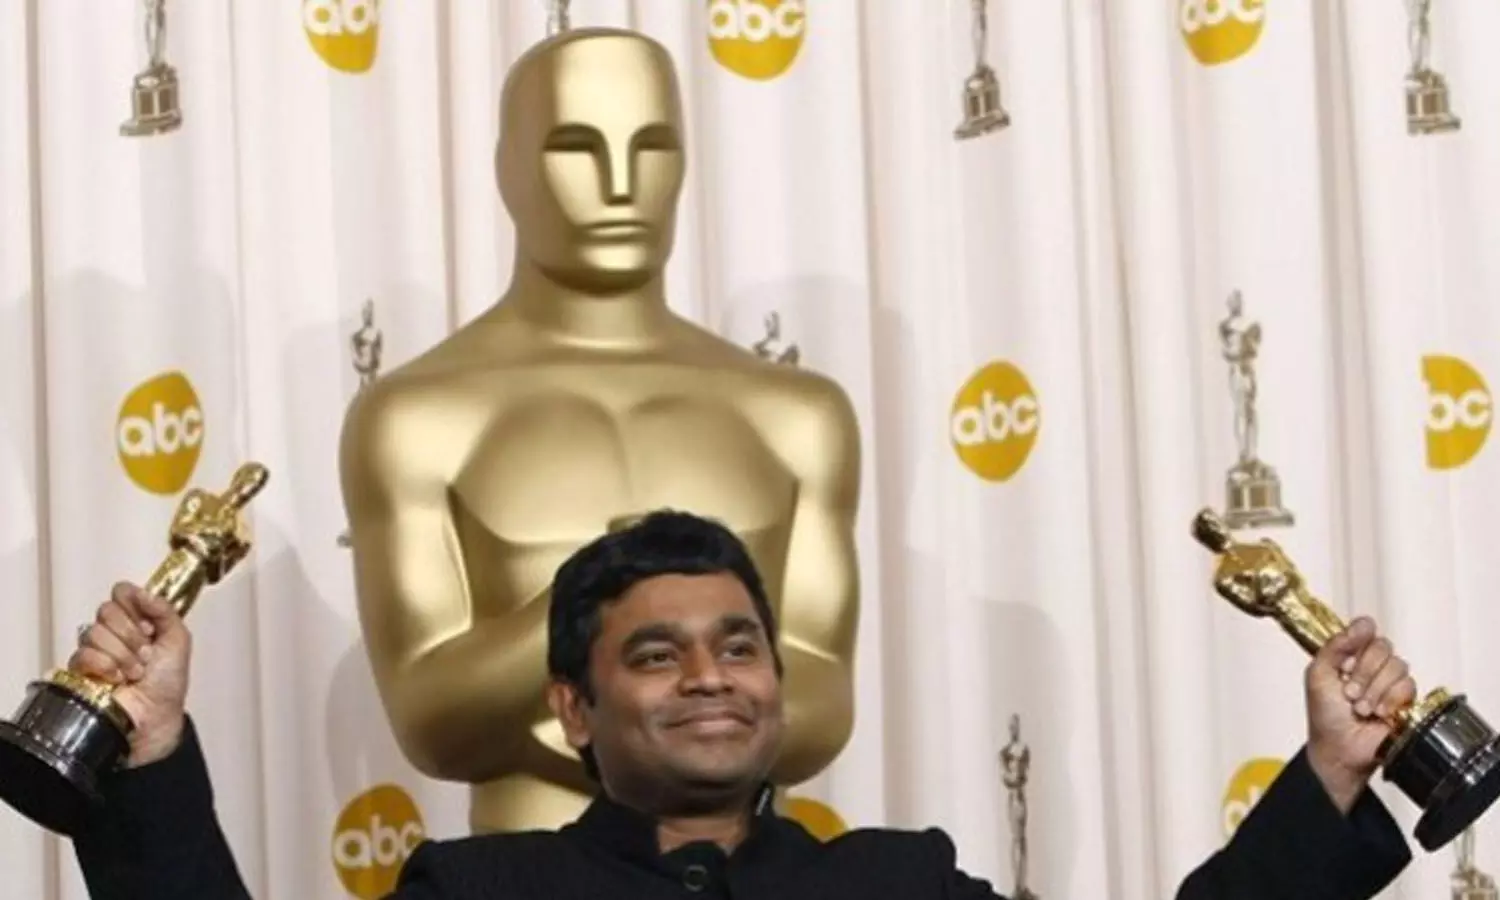 India is sending the wrong films to the Oscars - AR Rahman